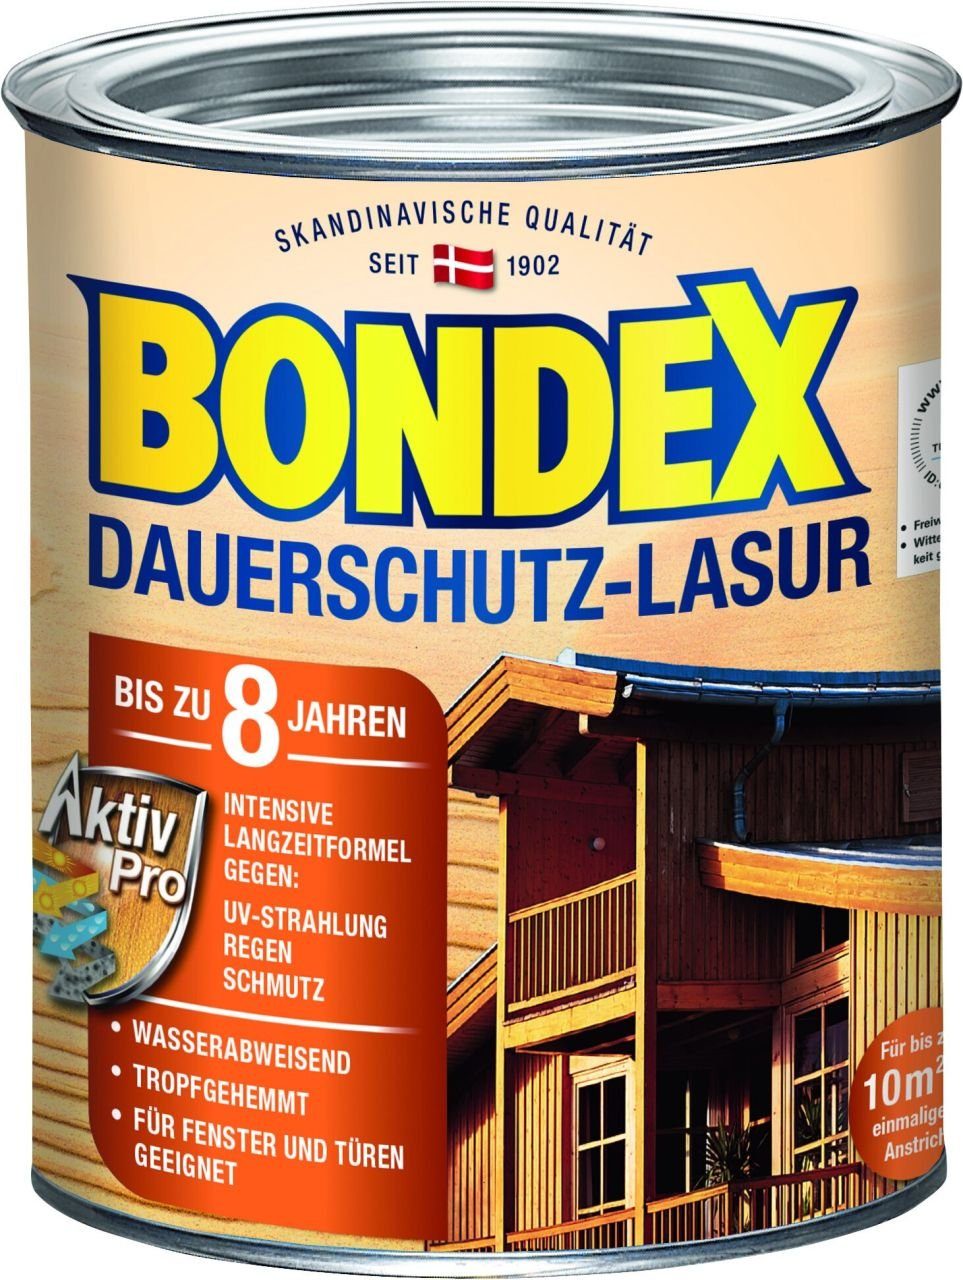 Bondex 750 Lasur Bondex Dauerschutz ml palisander rio Lasur